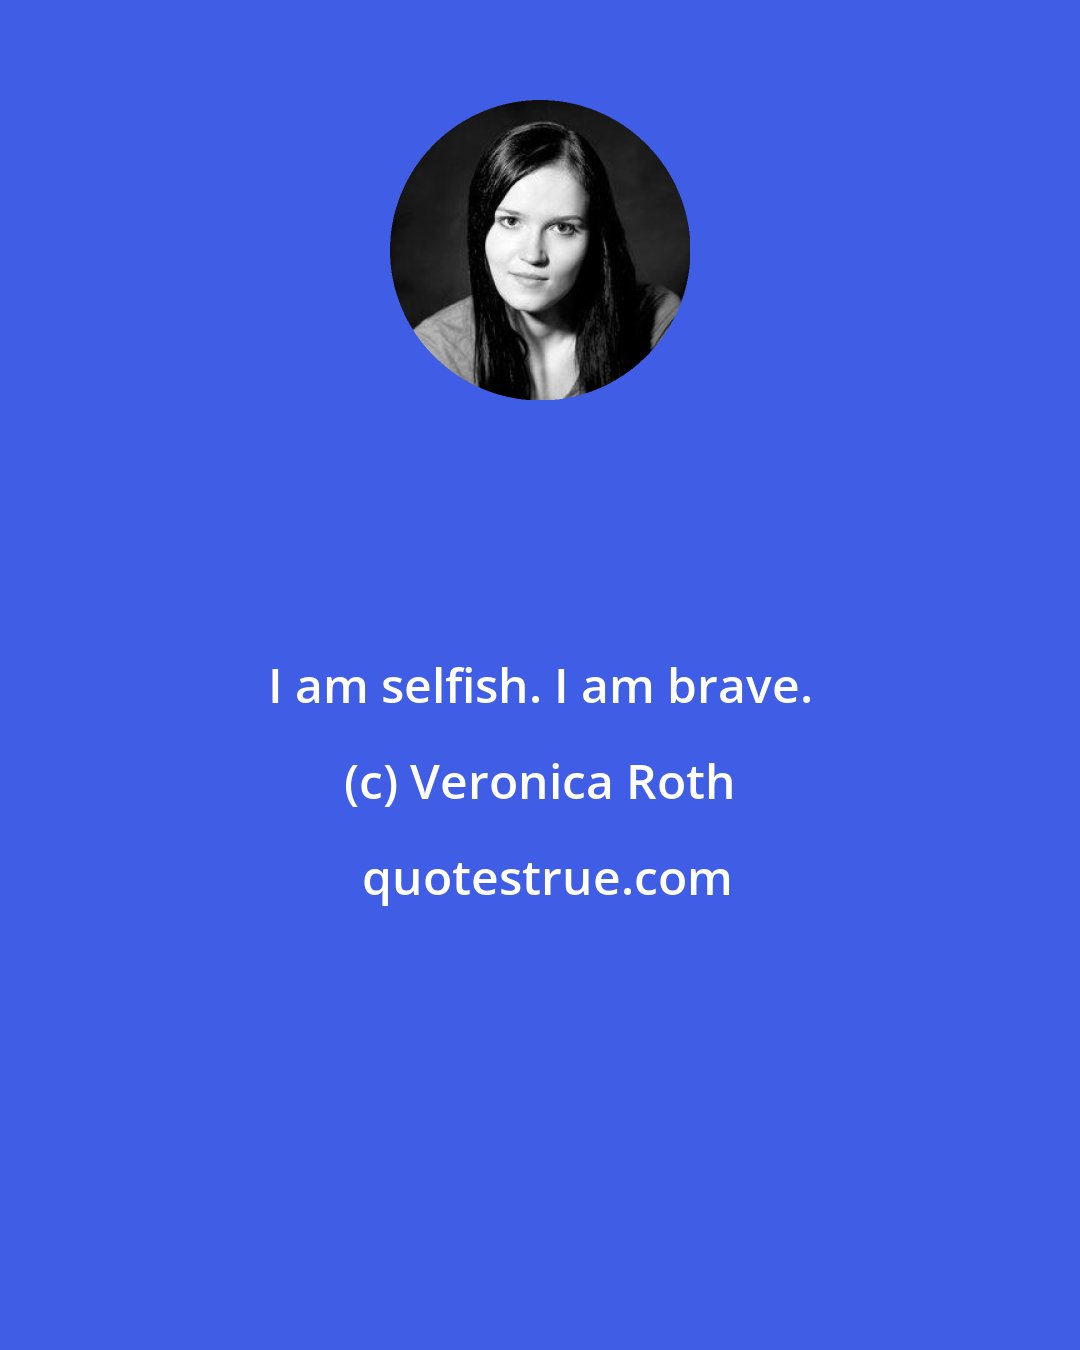 Veronica Roth: I am selfish. I am brave.